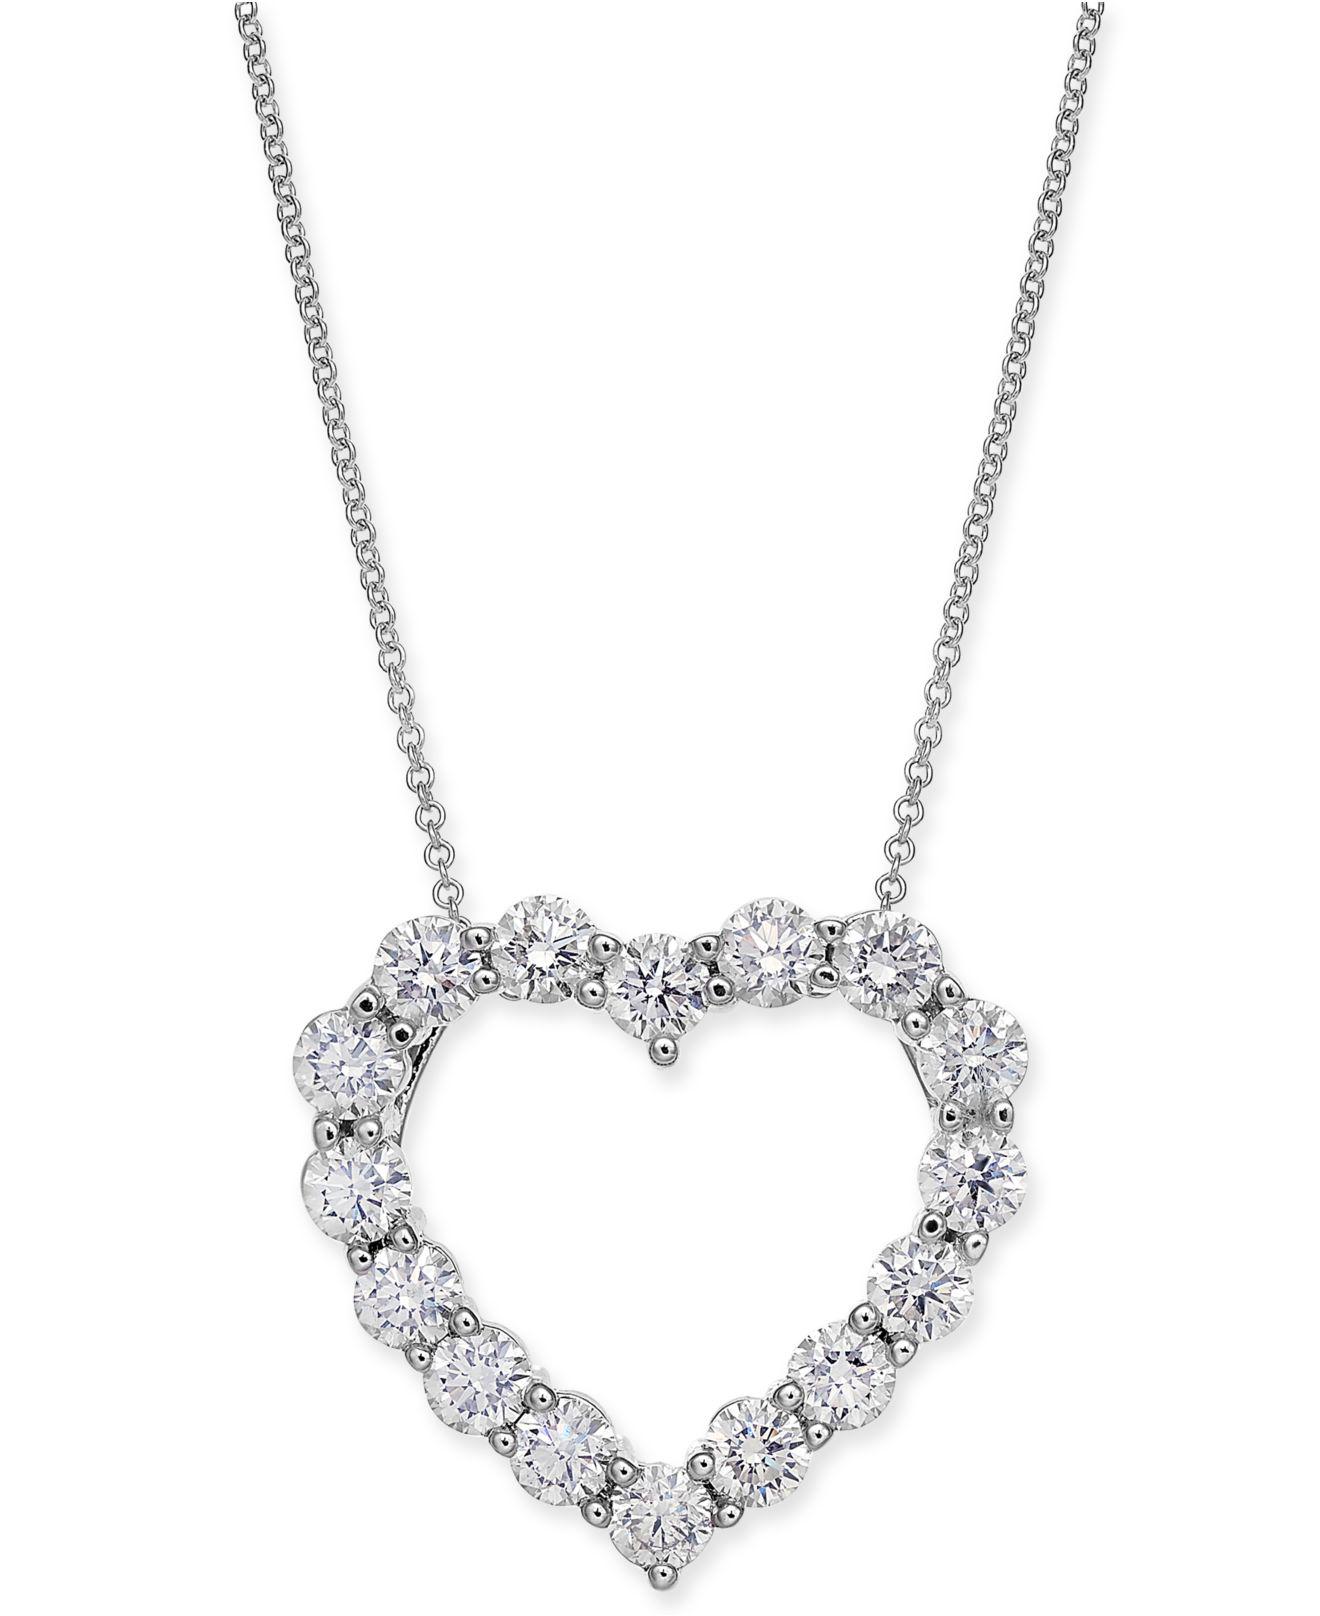 Lyst Macys Diamond Heart Pendant Necklace 2 910 Ct Tw In 14k White Gold 16 2